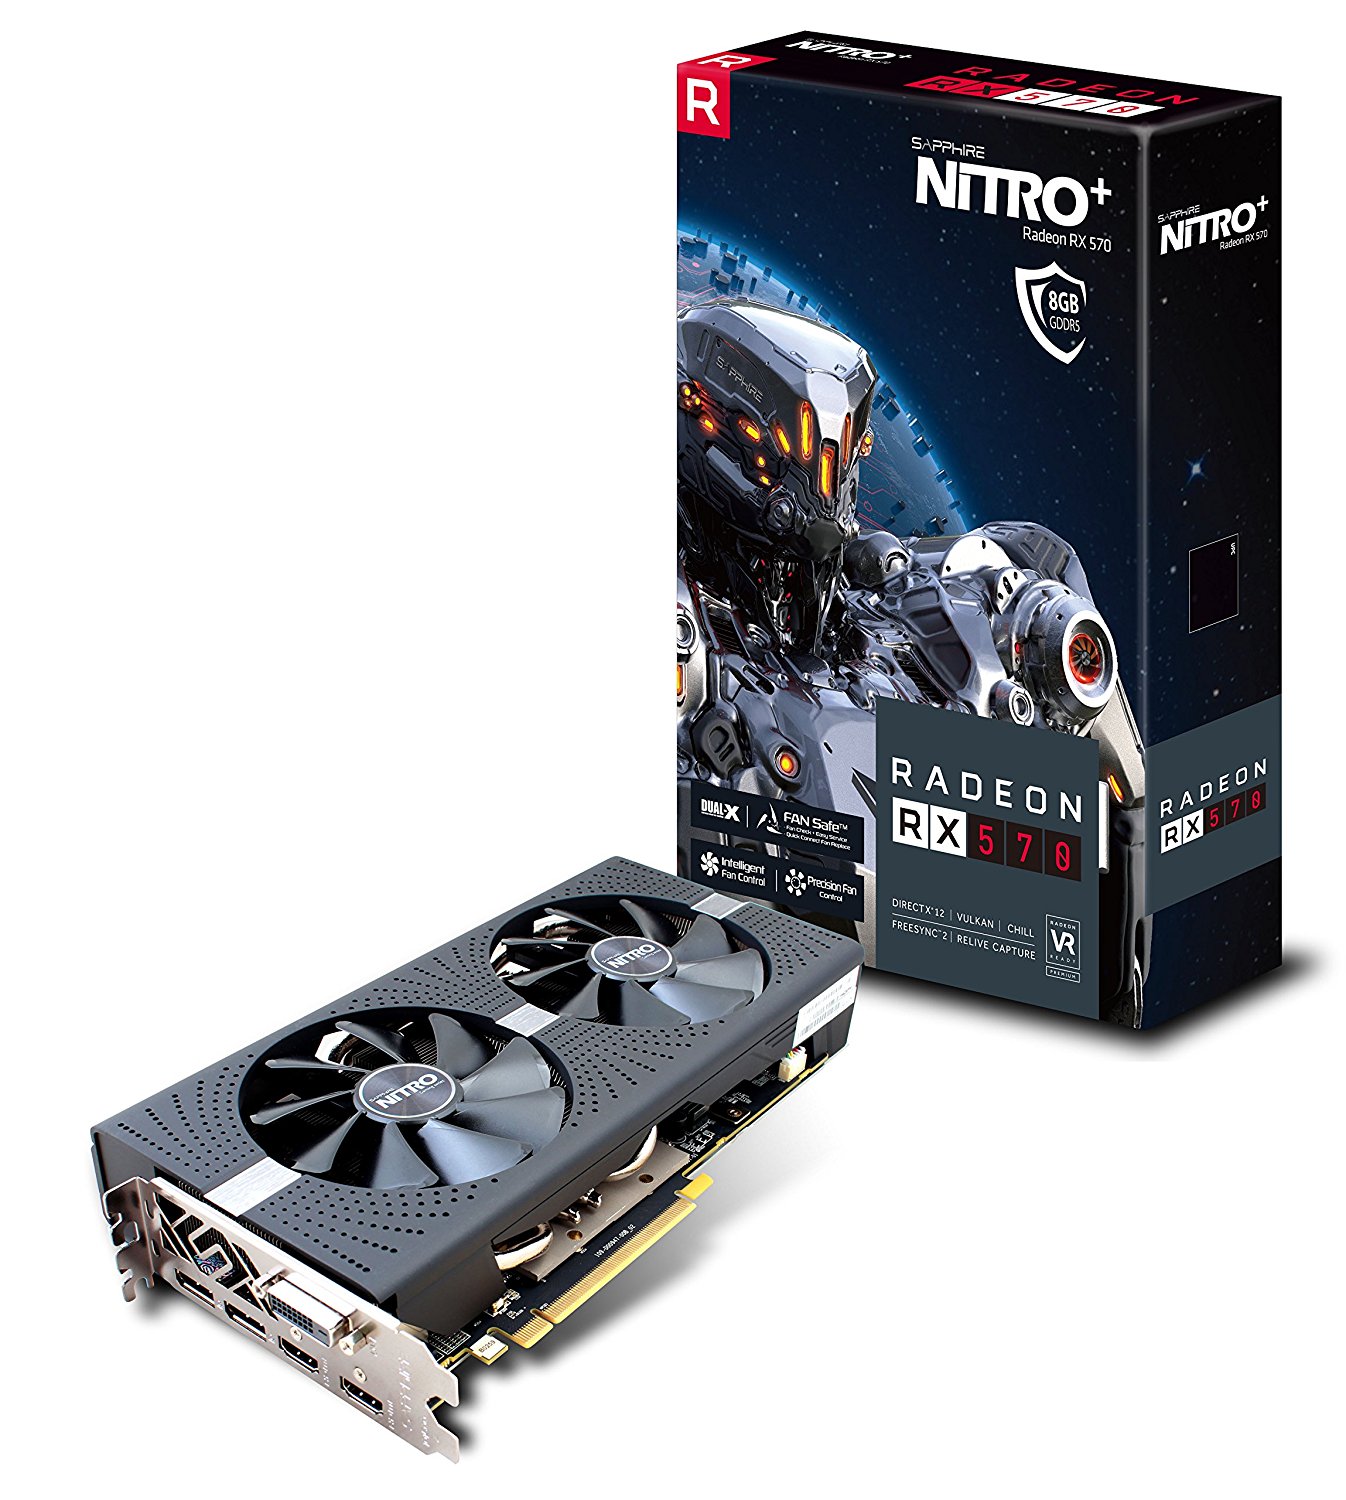 Sapphire Nitro+ Radeon RX 570 8GB Graphics Card